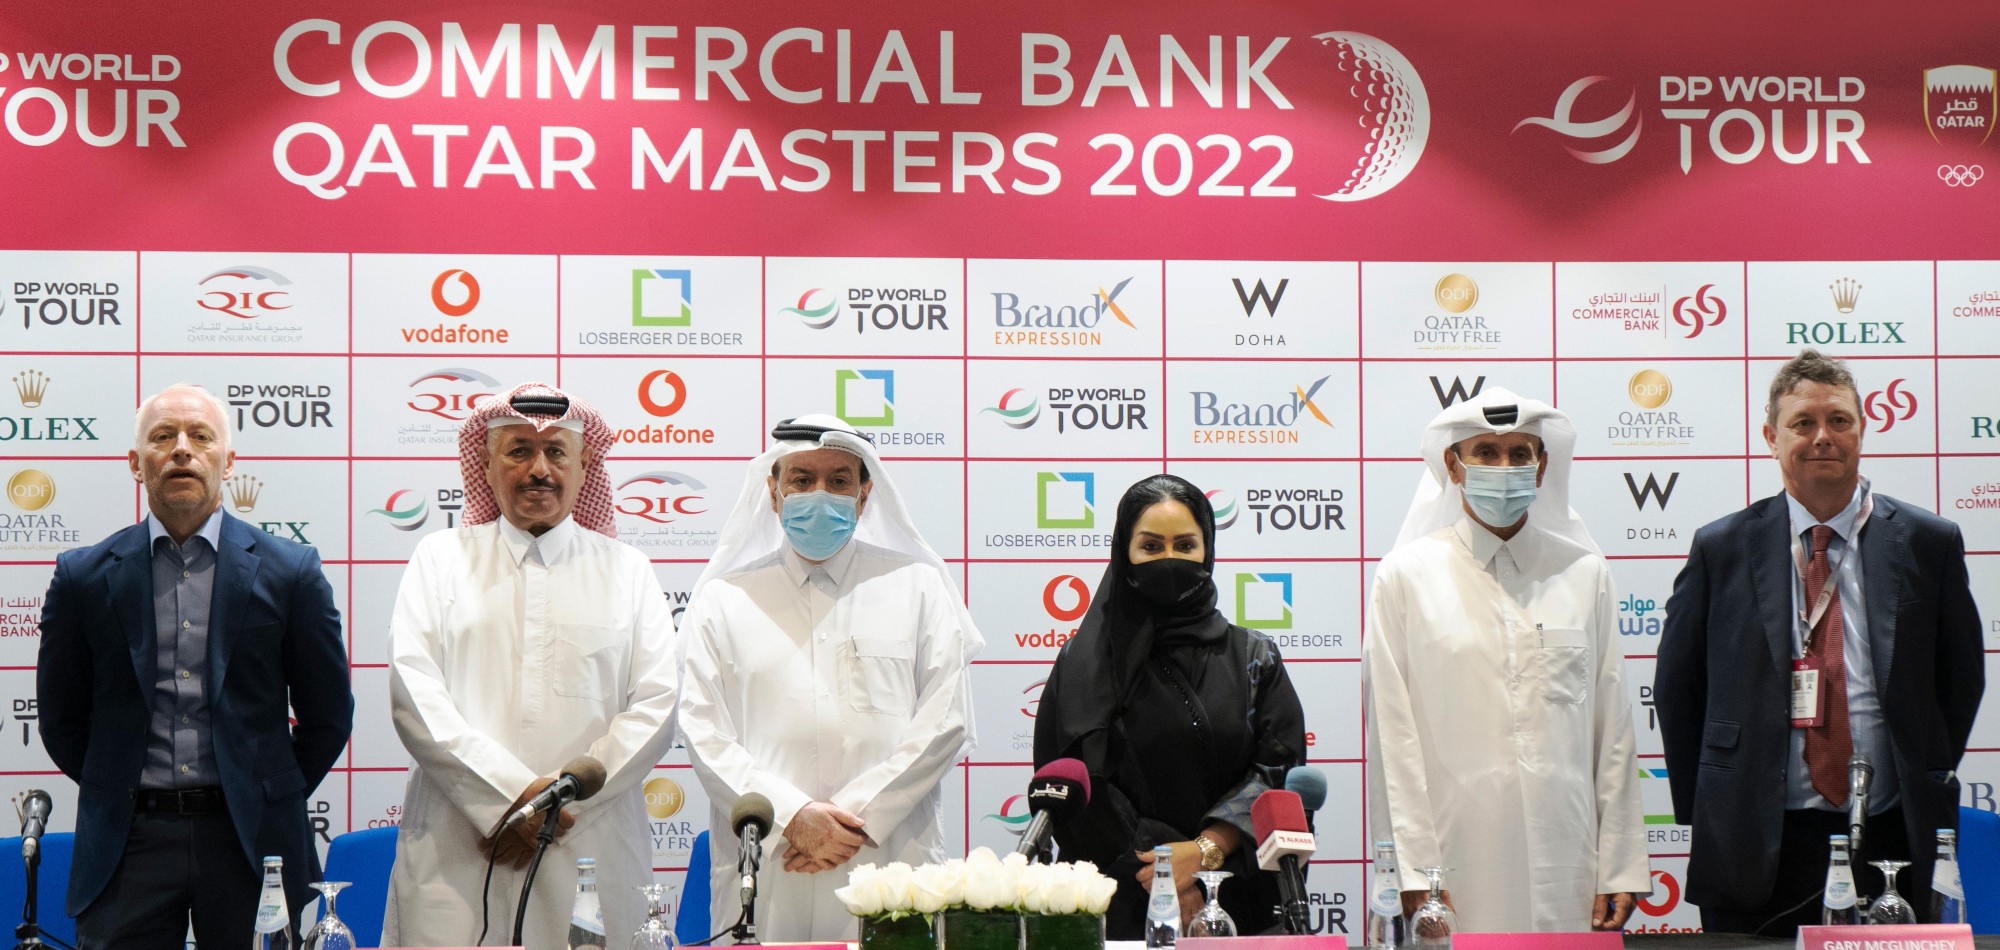 Stage set for CBQ Masters as Qatar